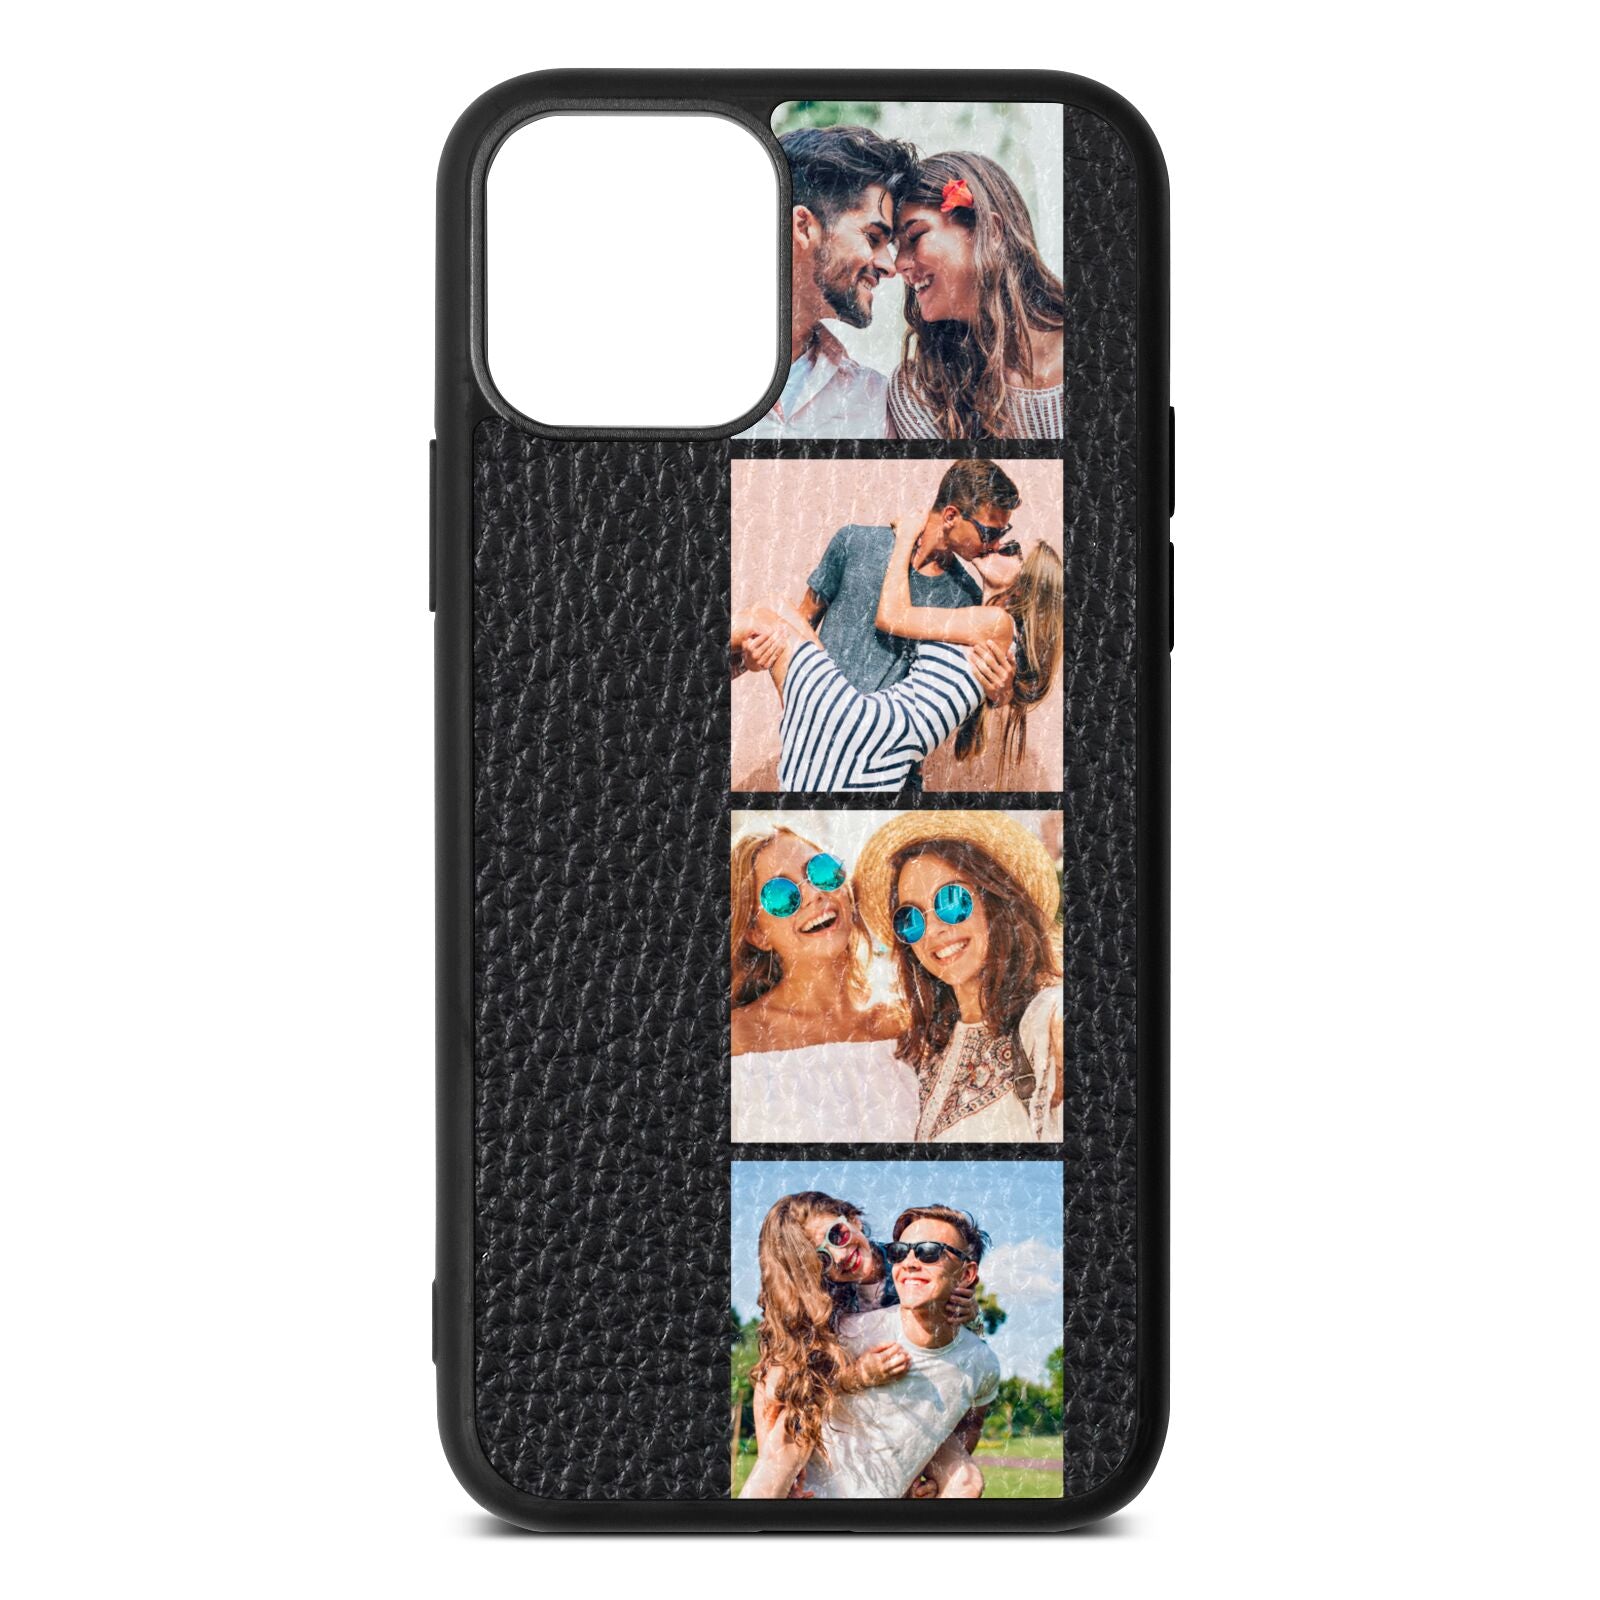 Photo Strip Montage Upload Black Pebble Leather iPhone 11 Pro Case